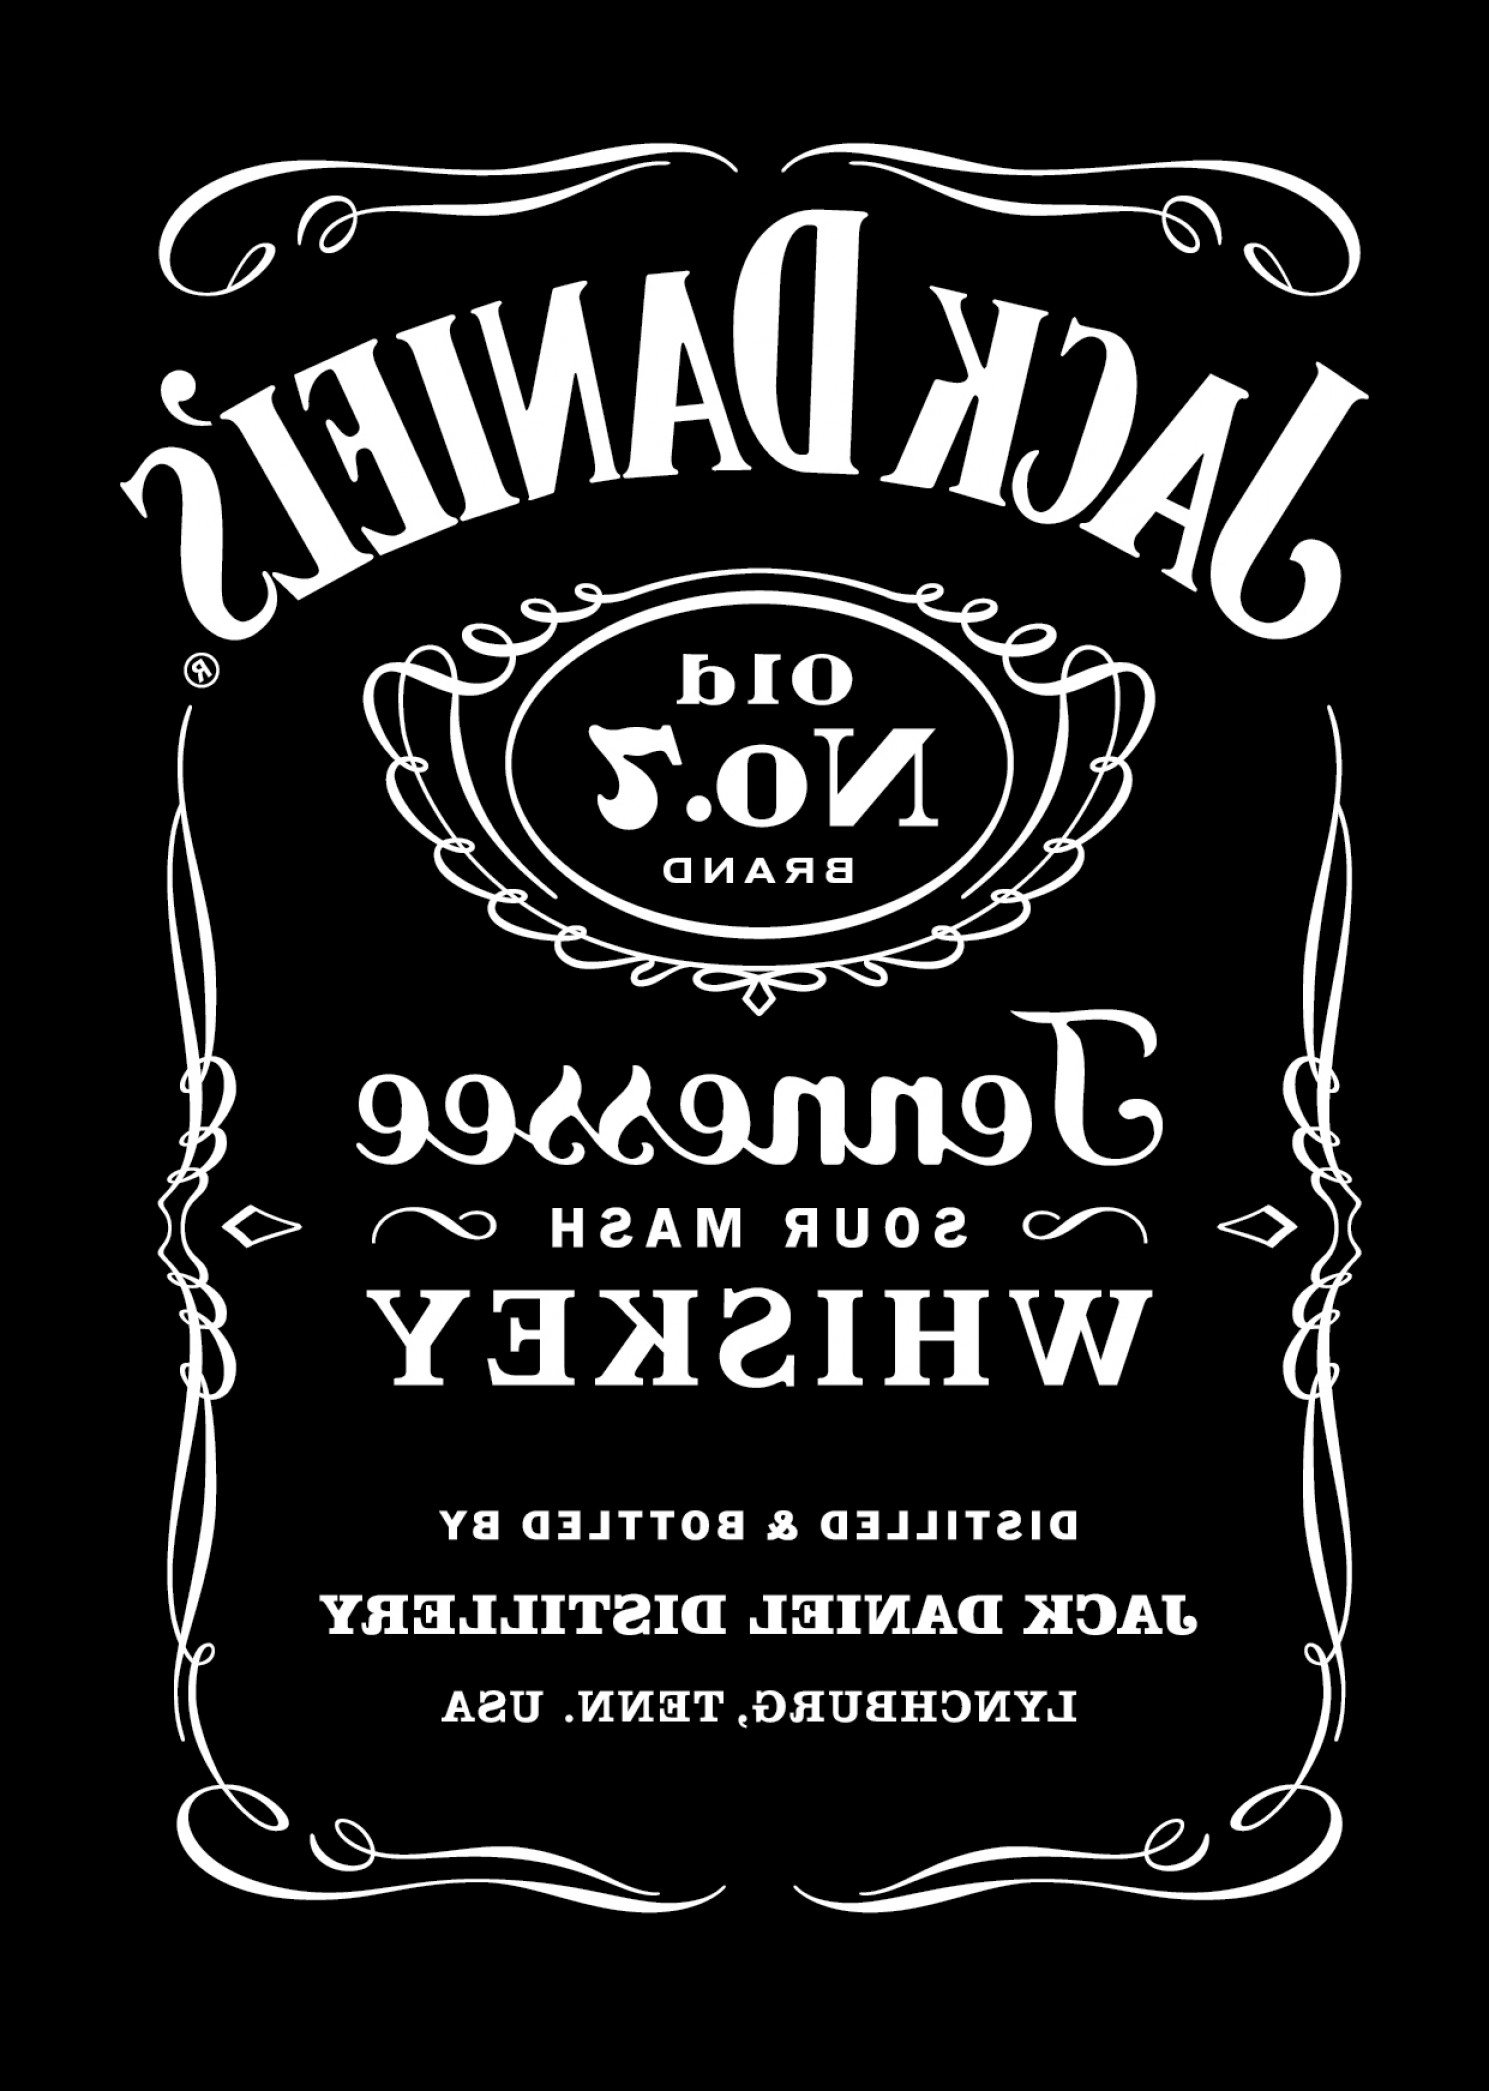 Download Jack Daniels Label Vector at Vectorified.com | Collection ...